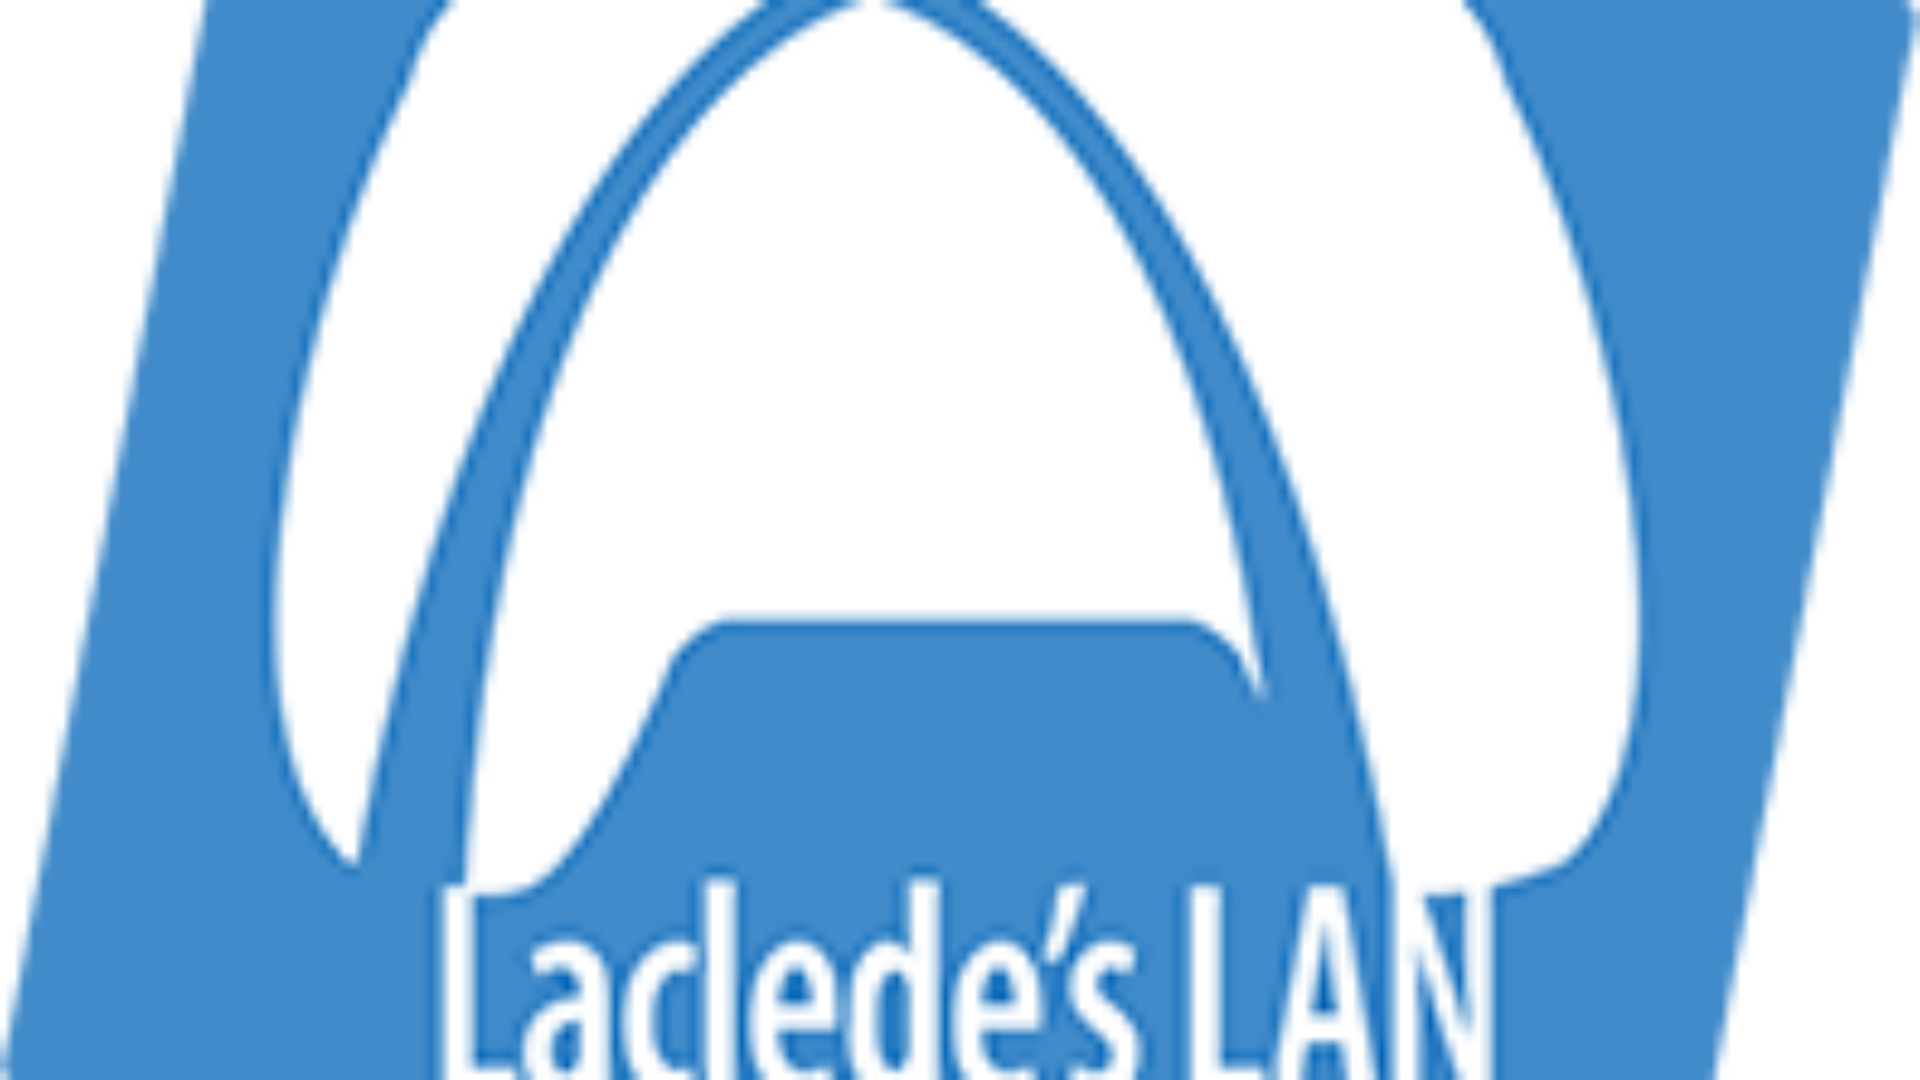 Laclede's LAN Official Logo-01